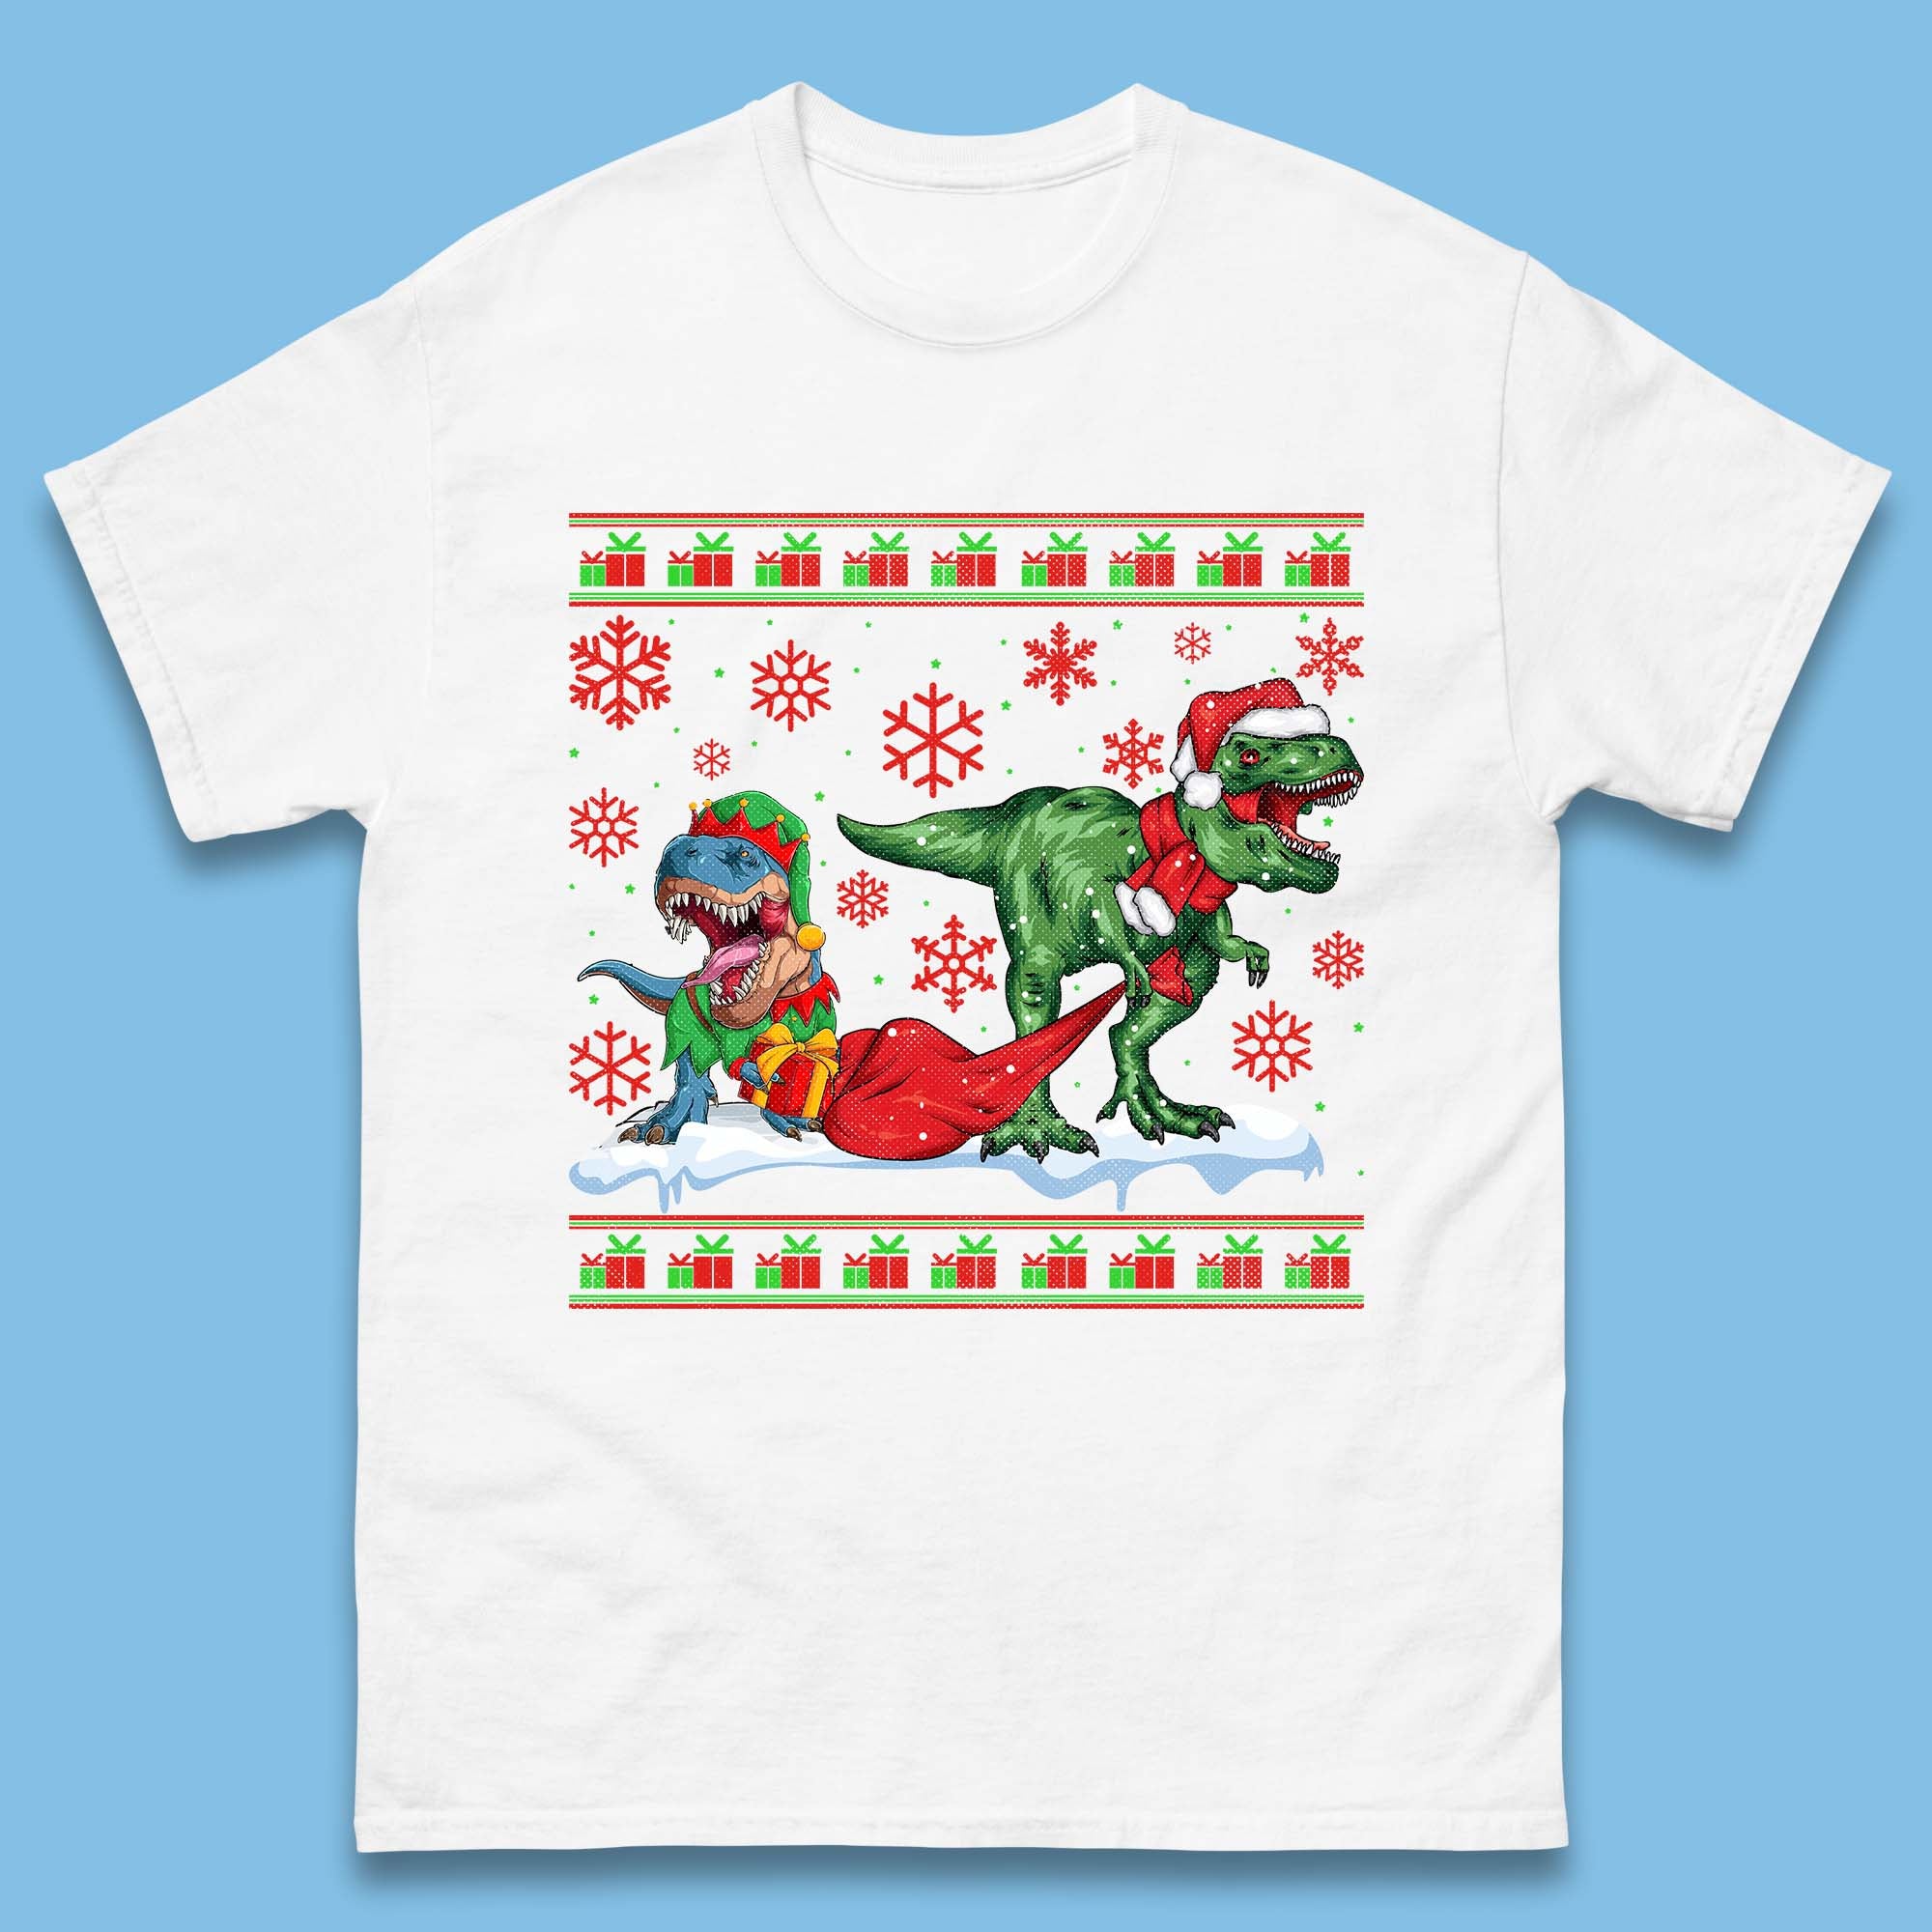 Santa Elf Dinosaur Trex Wearing Christmas Santa Claus And Elf Costume And Holding A Gift Bag Xmas Mens Tee Top